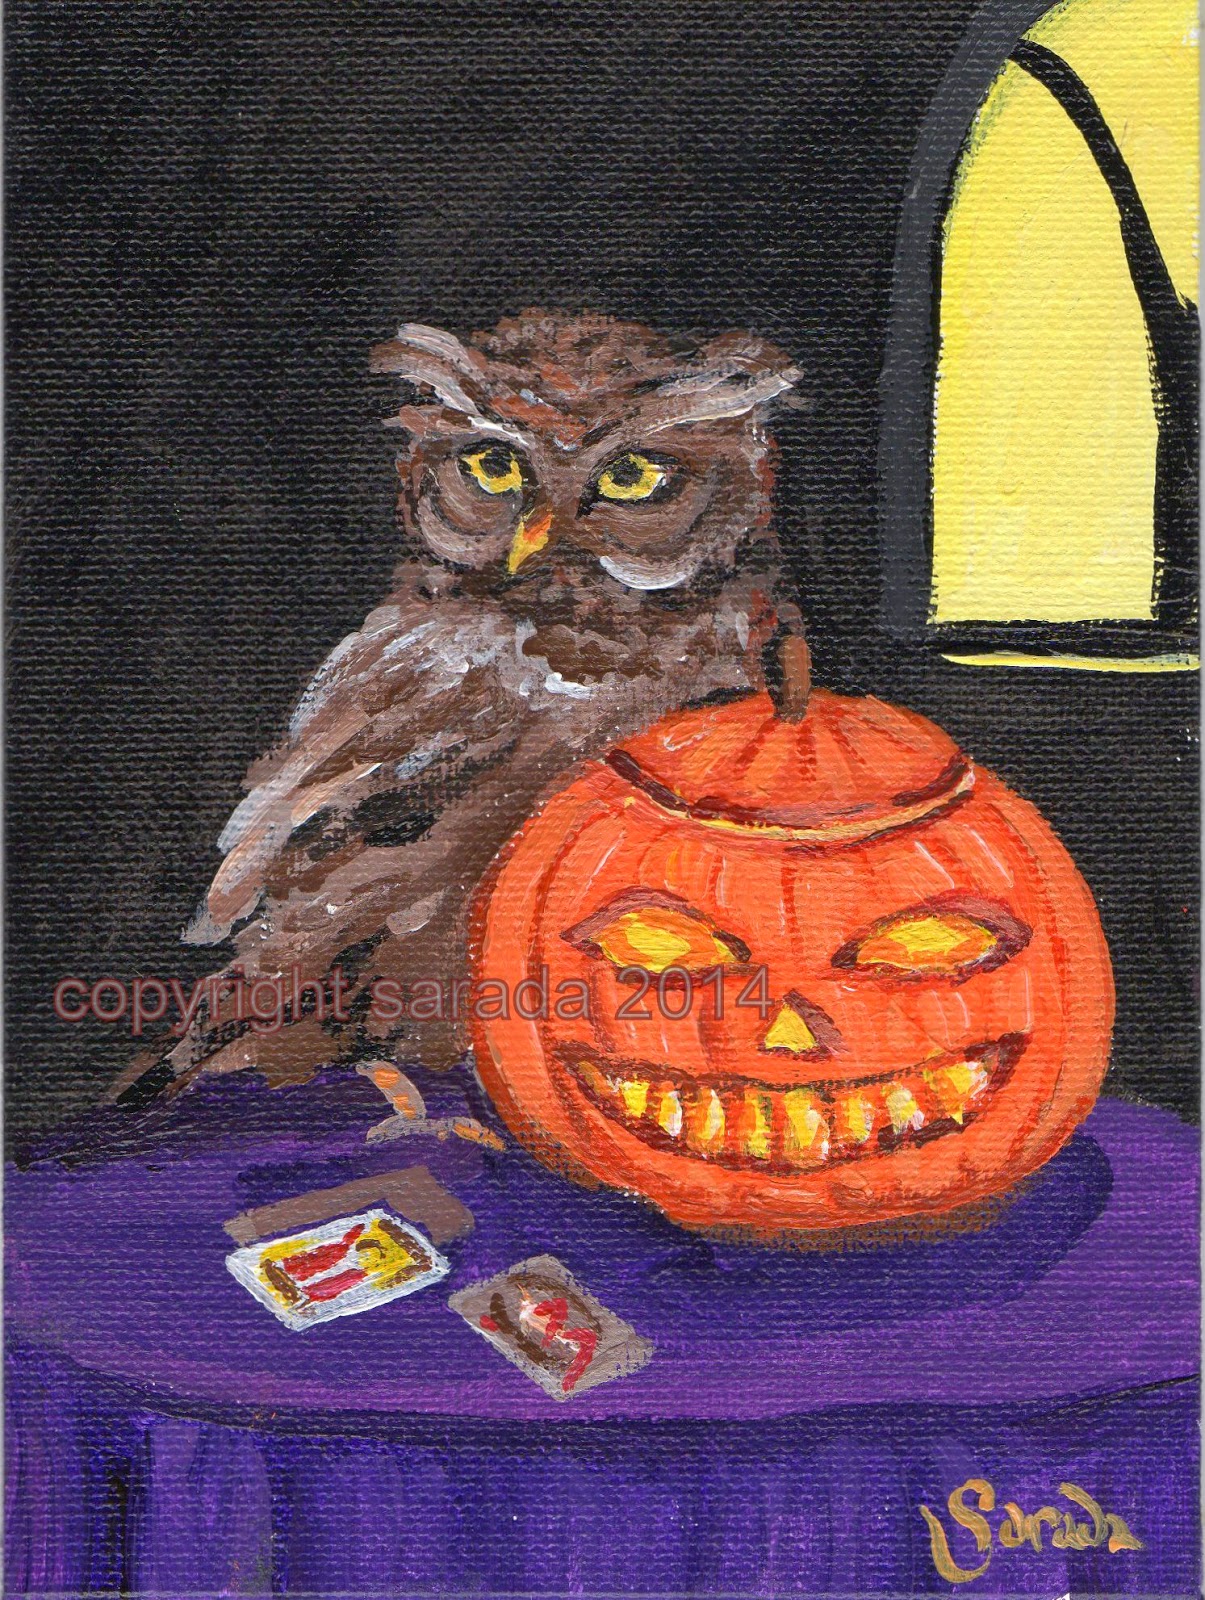 https://www.etsy.com/listing/205016448/halloween-tarot-owl-with-jack-o-lantern?ref=shop_home_active_12